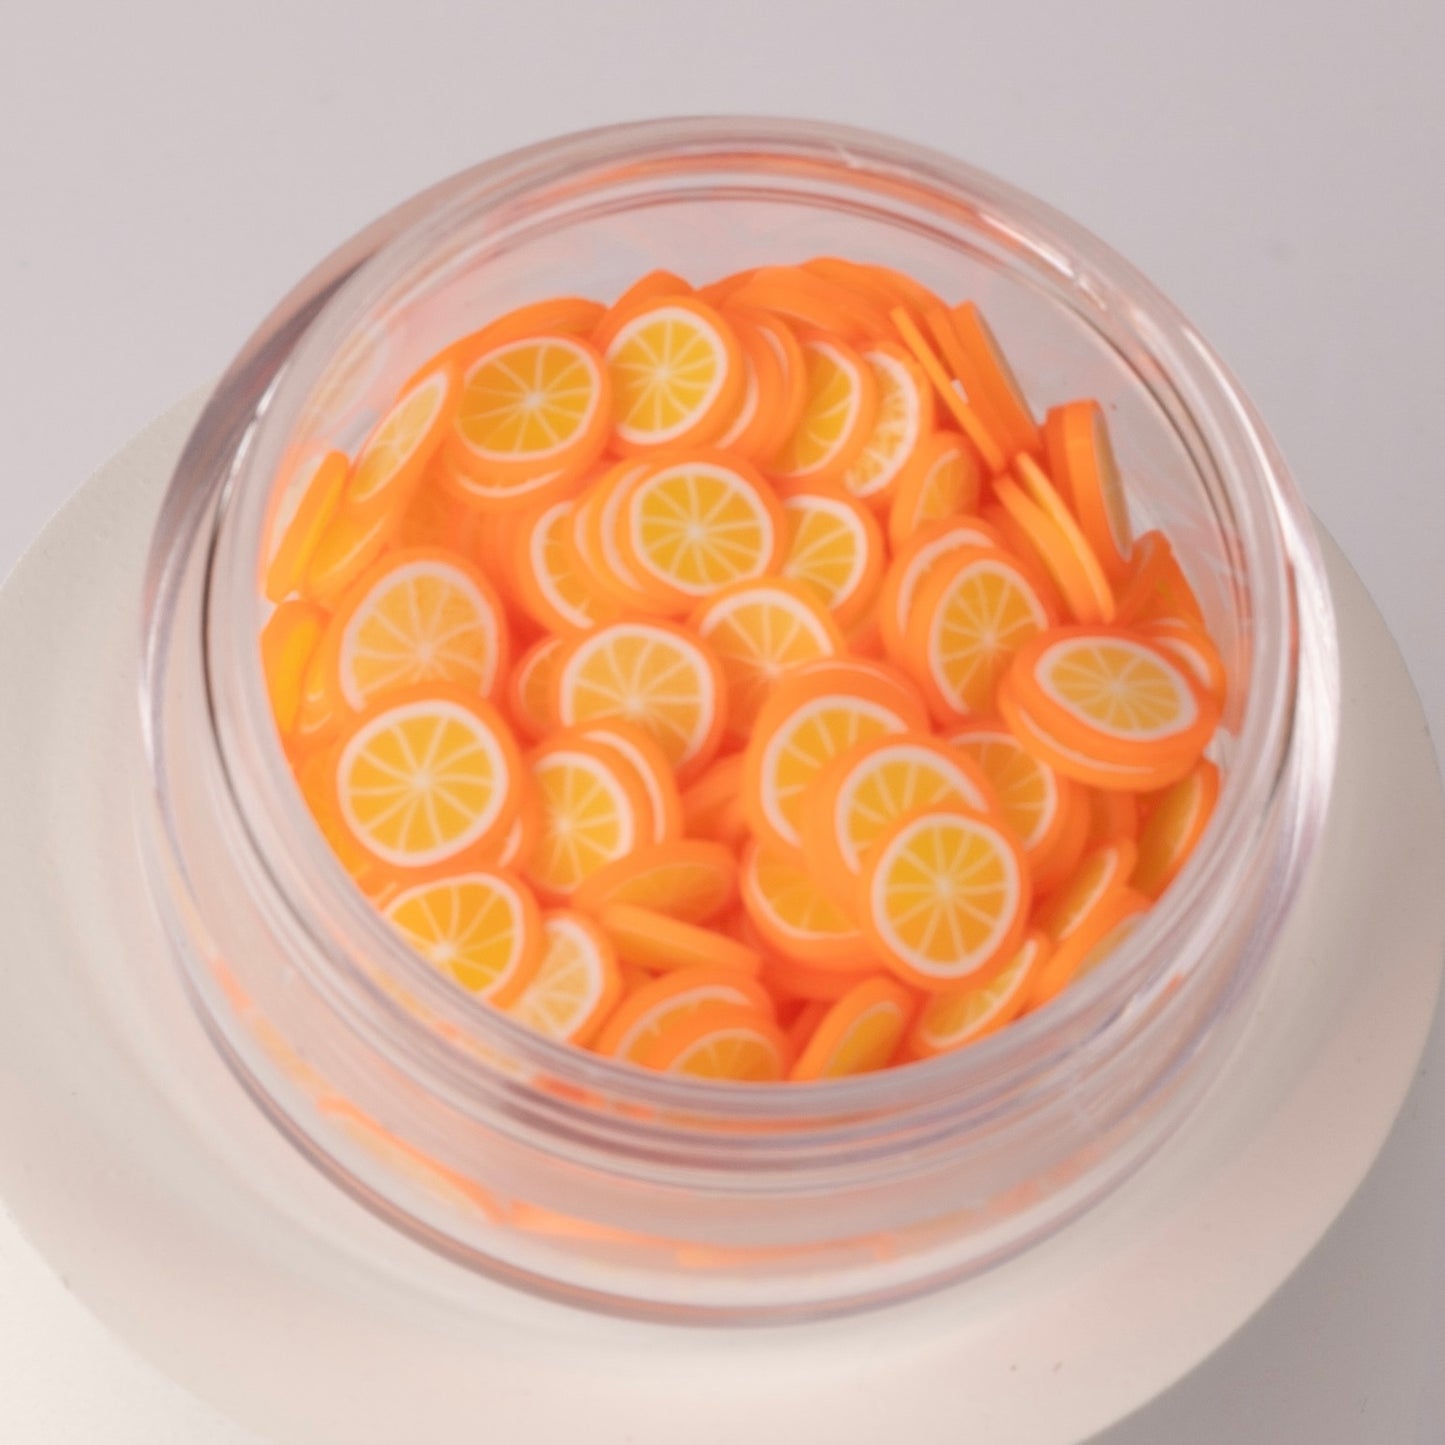 Mini orange slices in clear jar on white background.